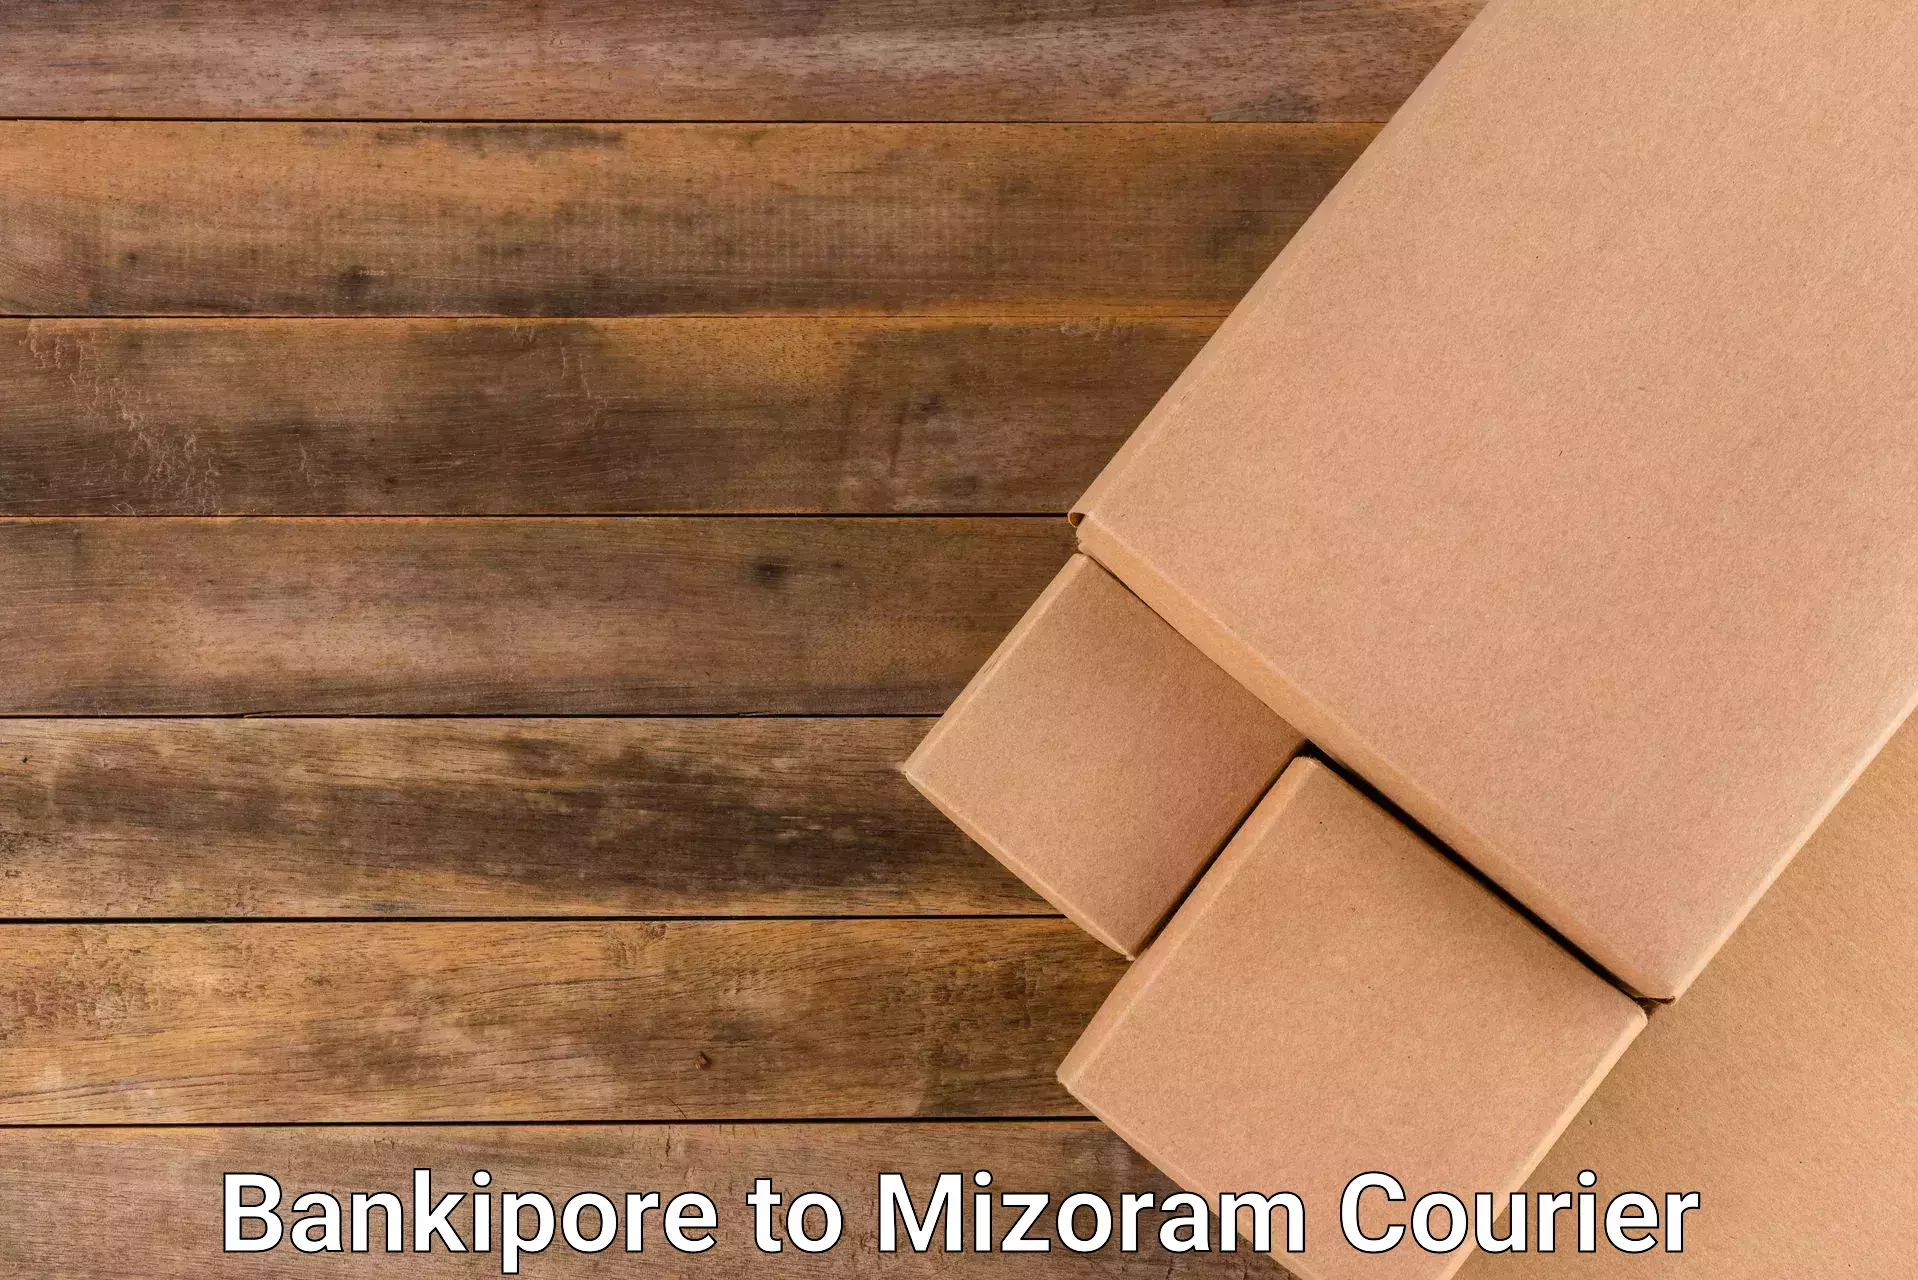 High-priority parcel service Bankipore to Mizoram